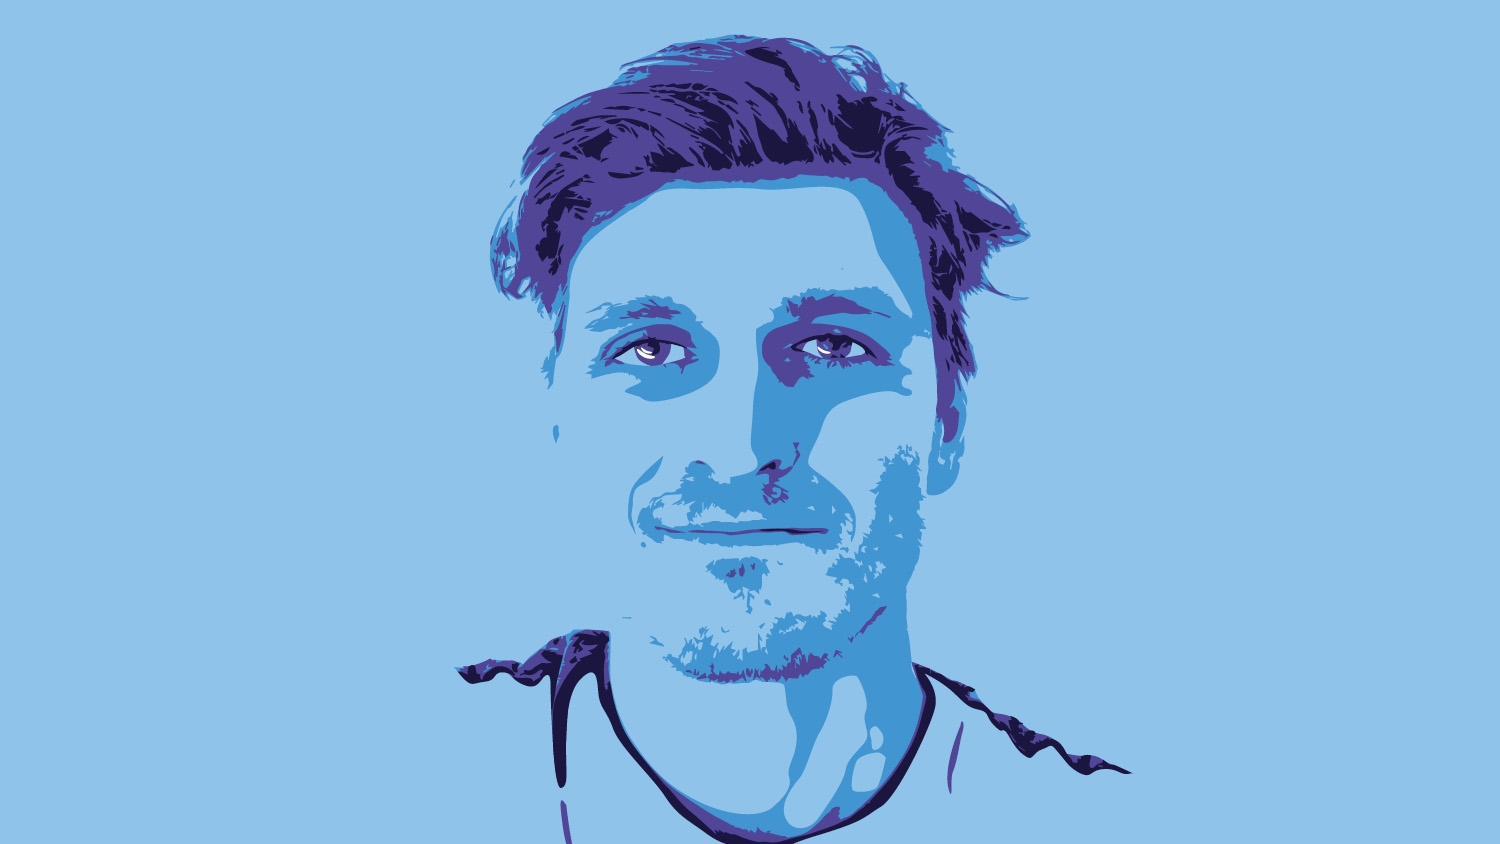 Jacob Ridley portrait on a blue background